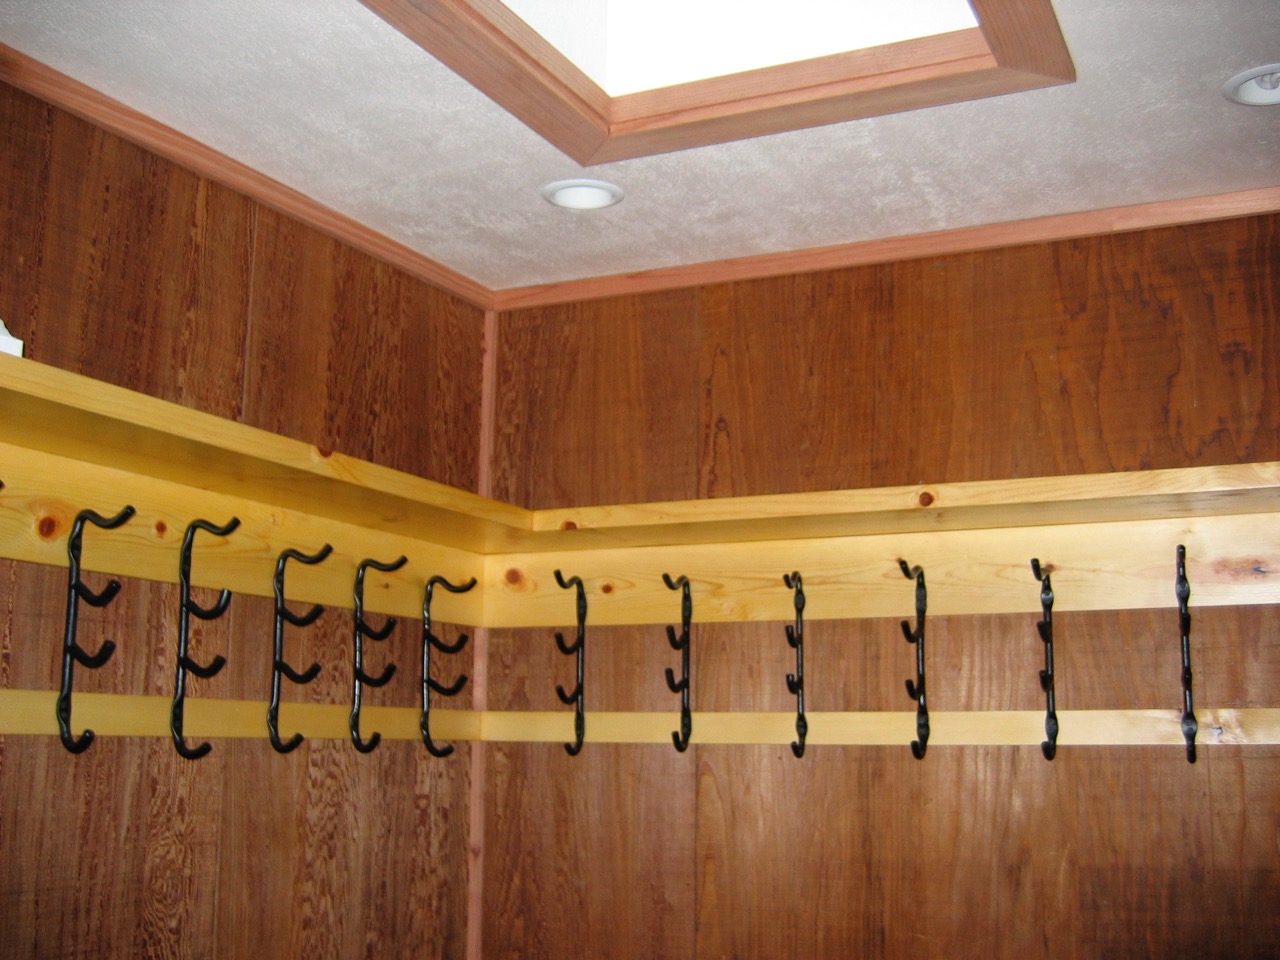 Shelf and coat hooks detail